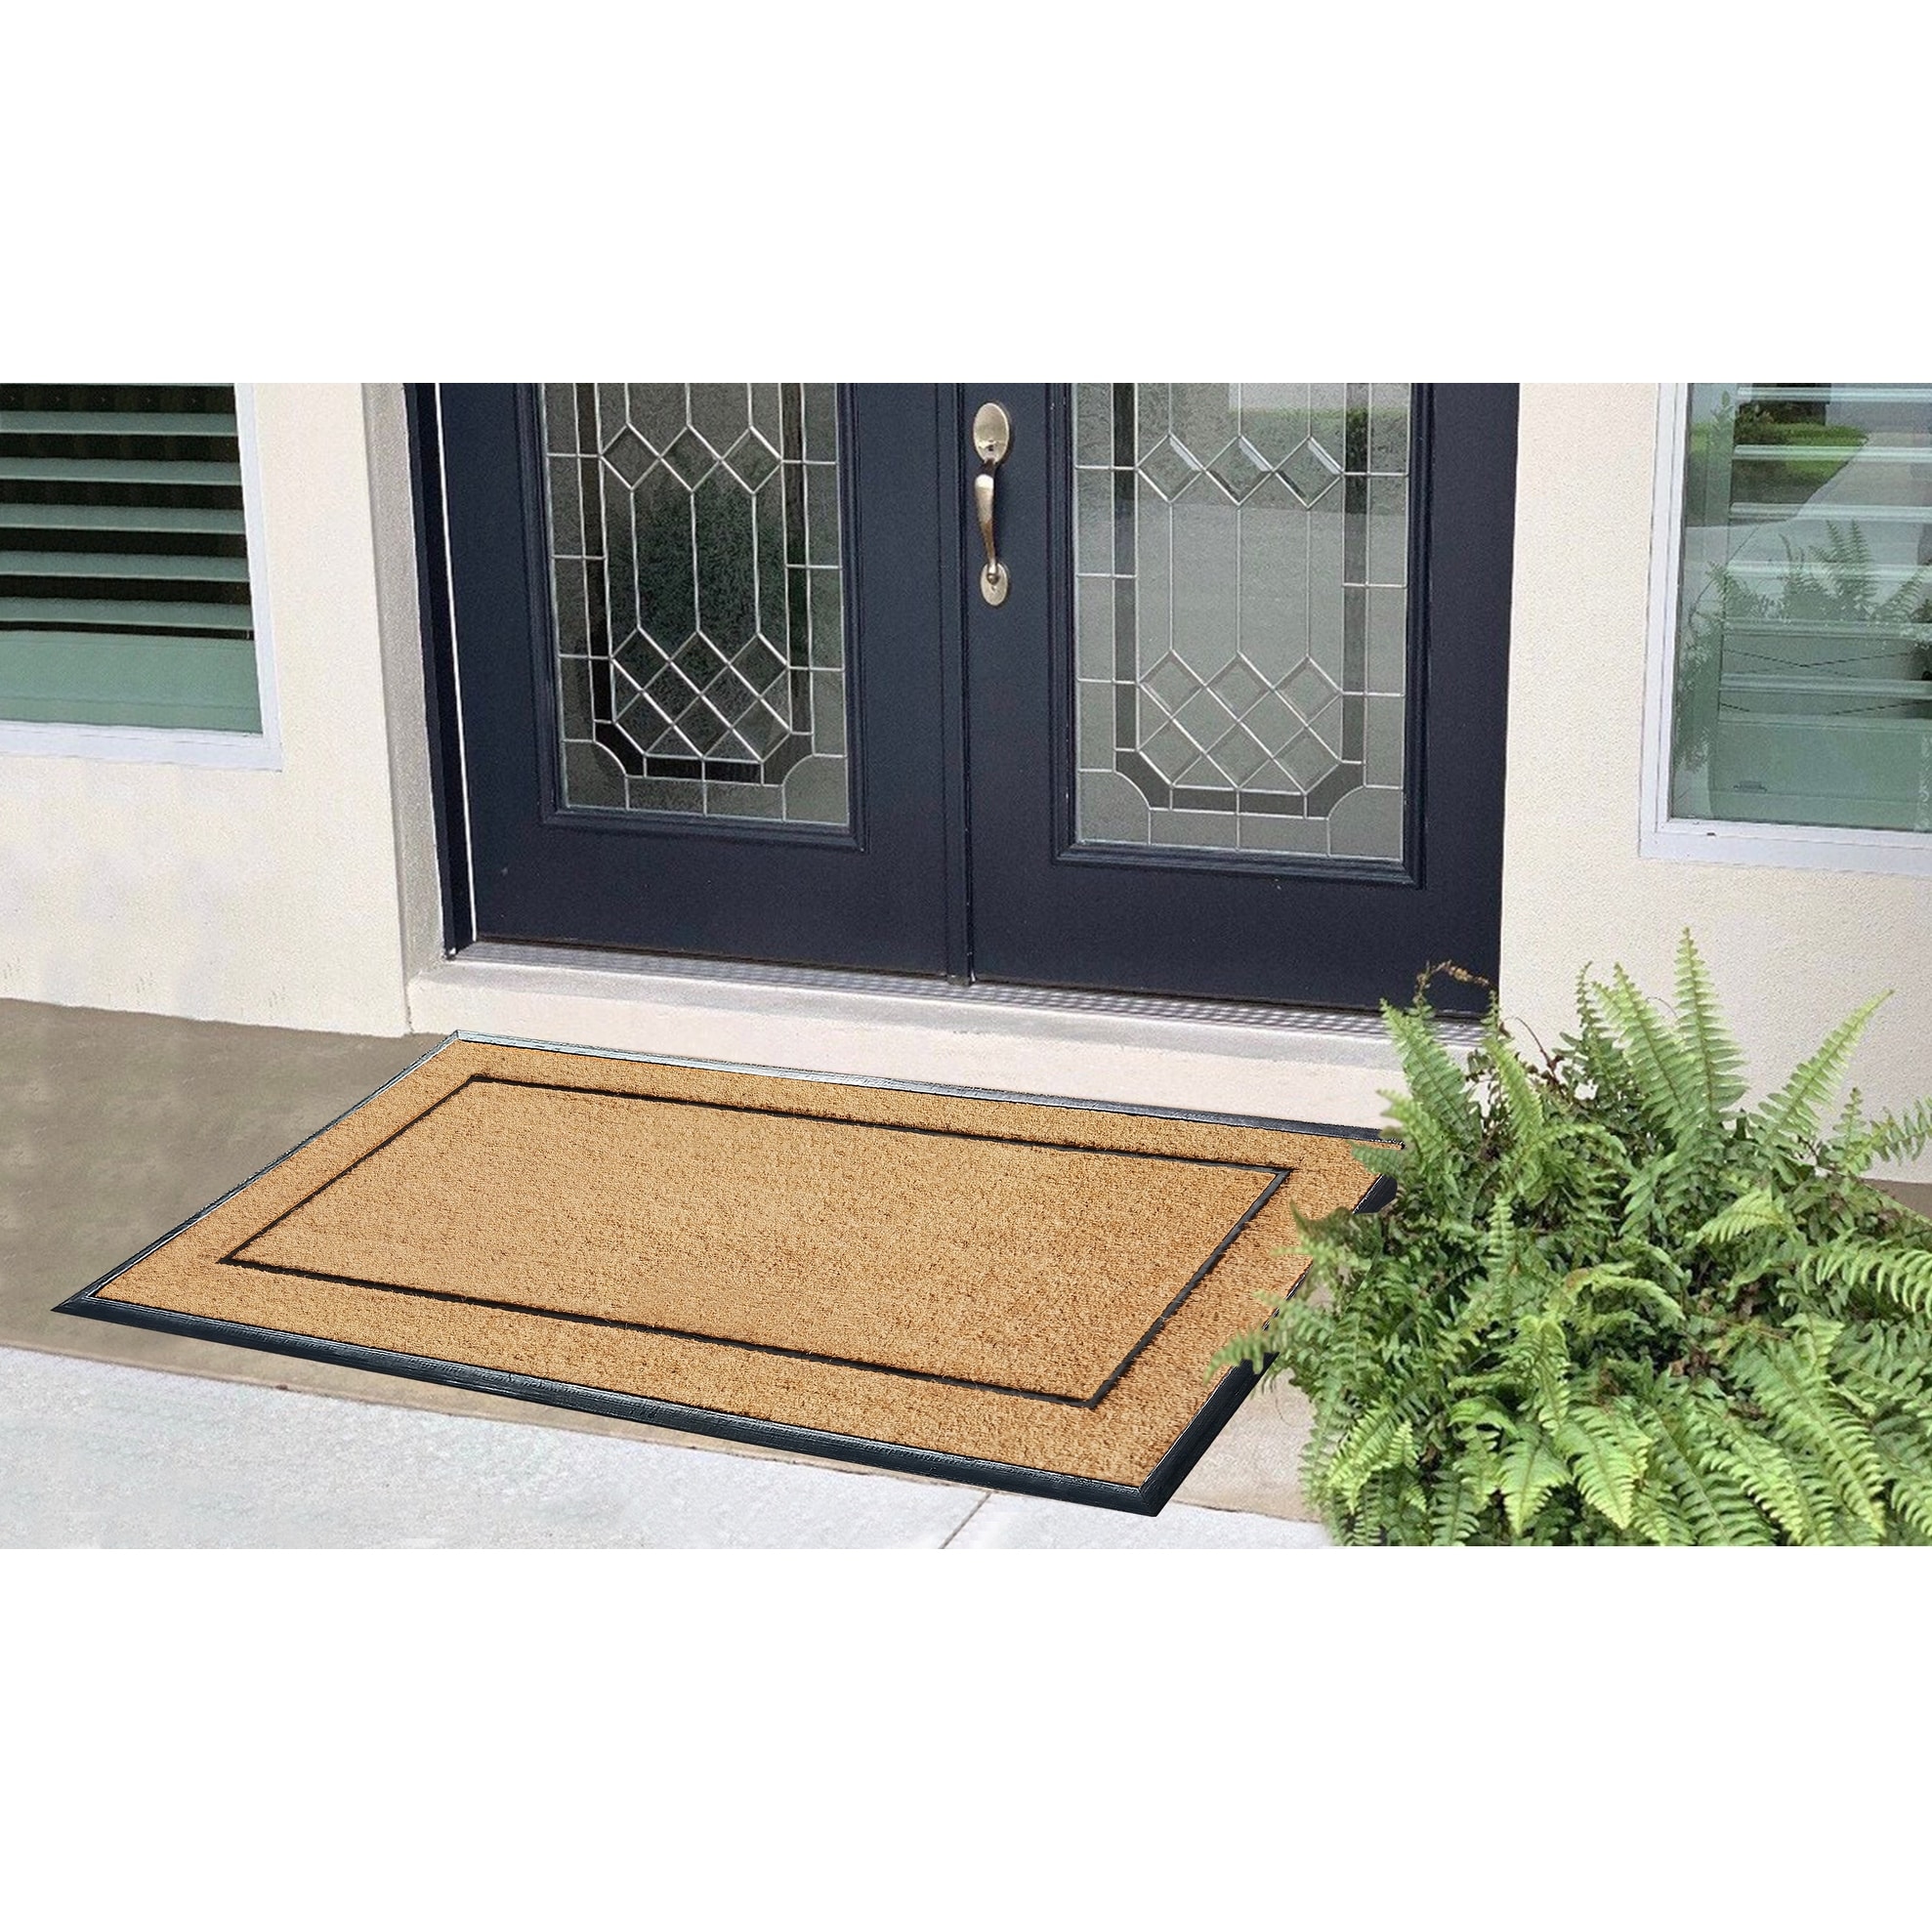 A1HC Natural Coir & Rubber Extra Large Doormat, Heavy Duty, Front Doormat -  30X60